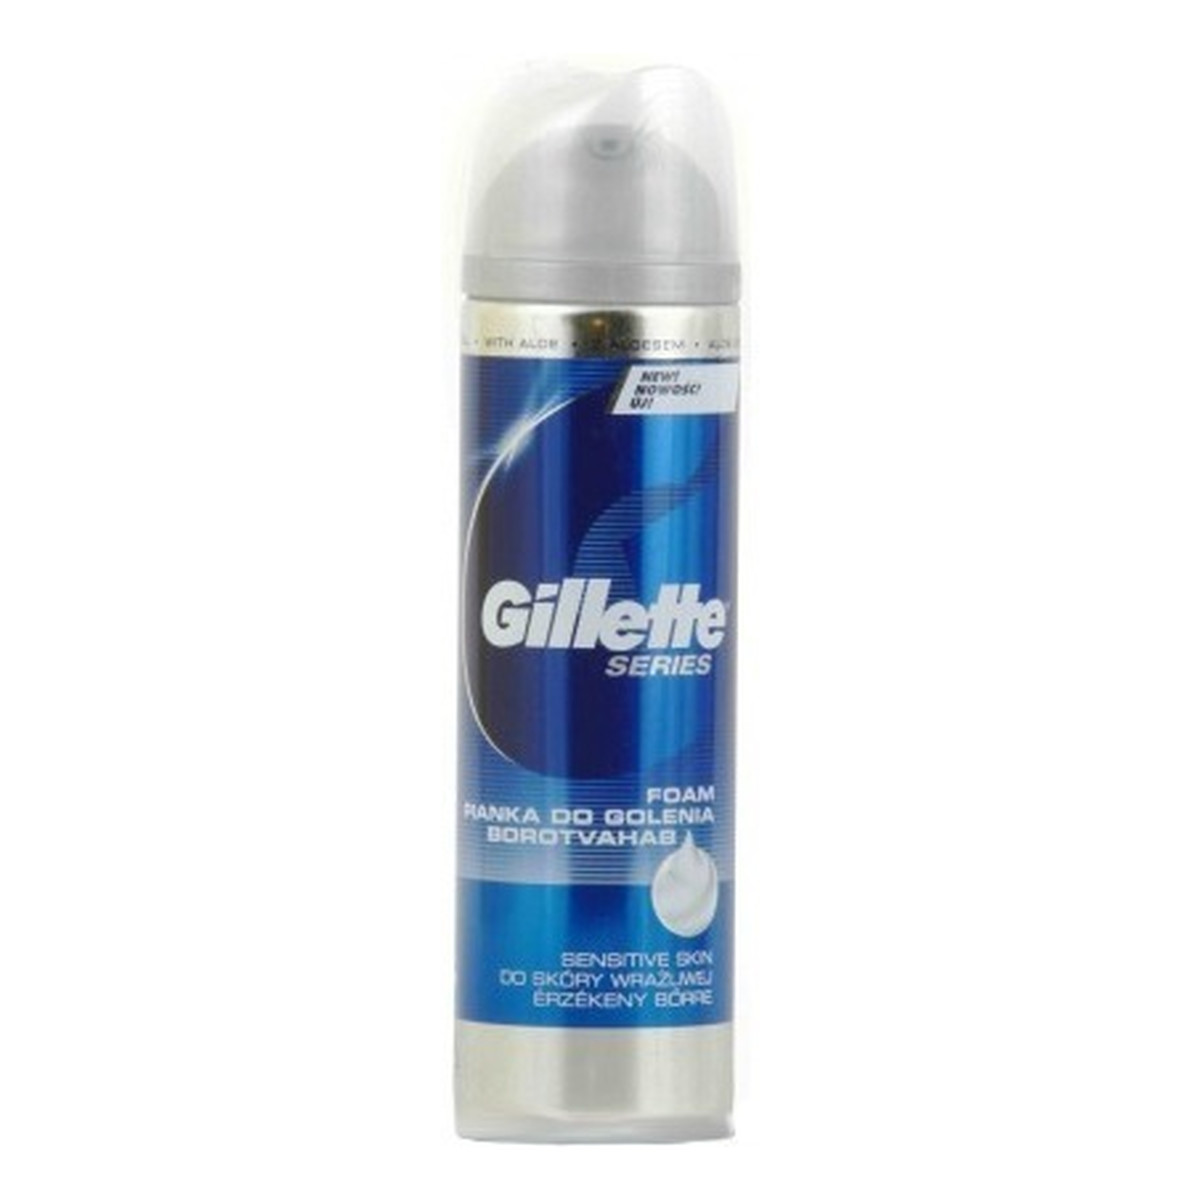 Gillette Series Pianka Do Golenia Dla Mężczyzn Sensitive 250ml